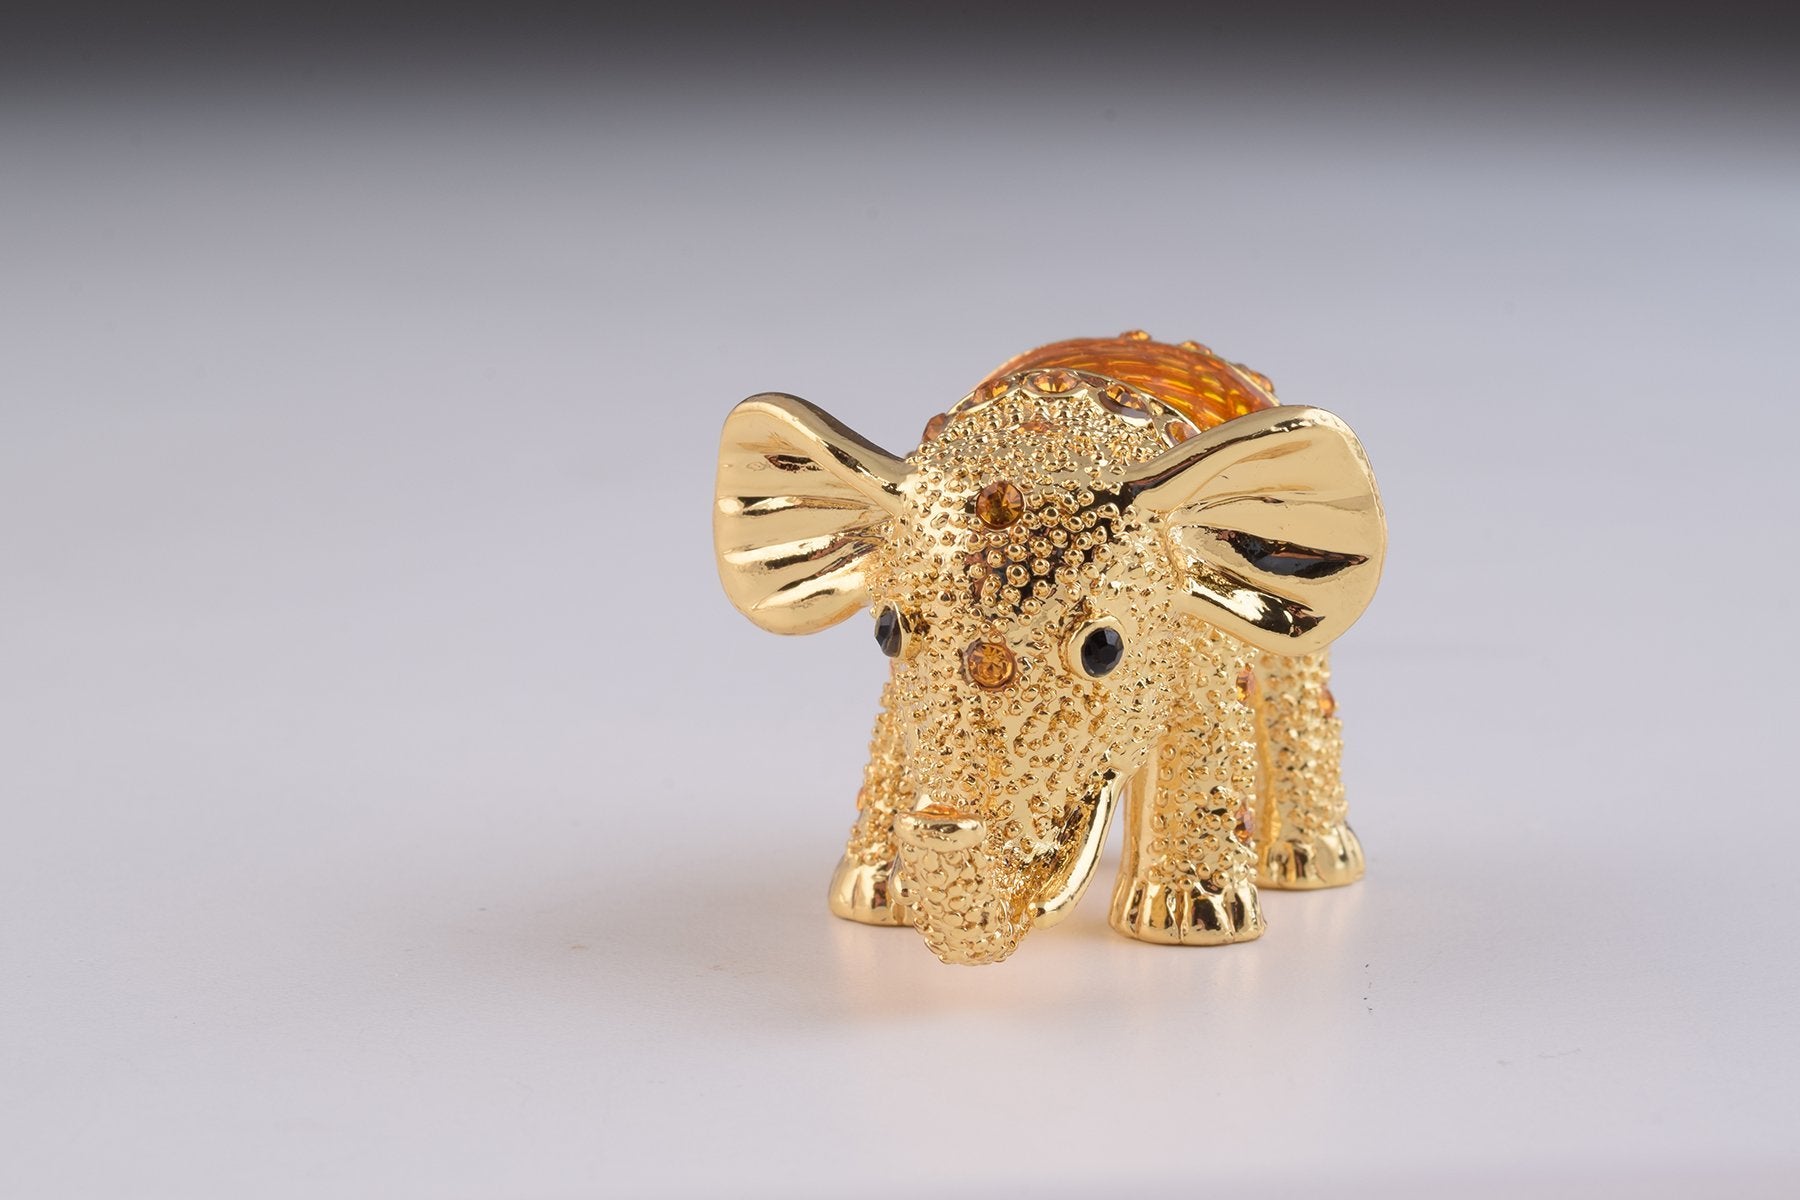 Keren Kopal Gold Elephant  41.50